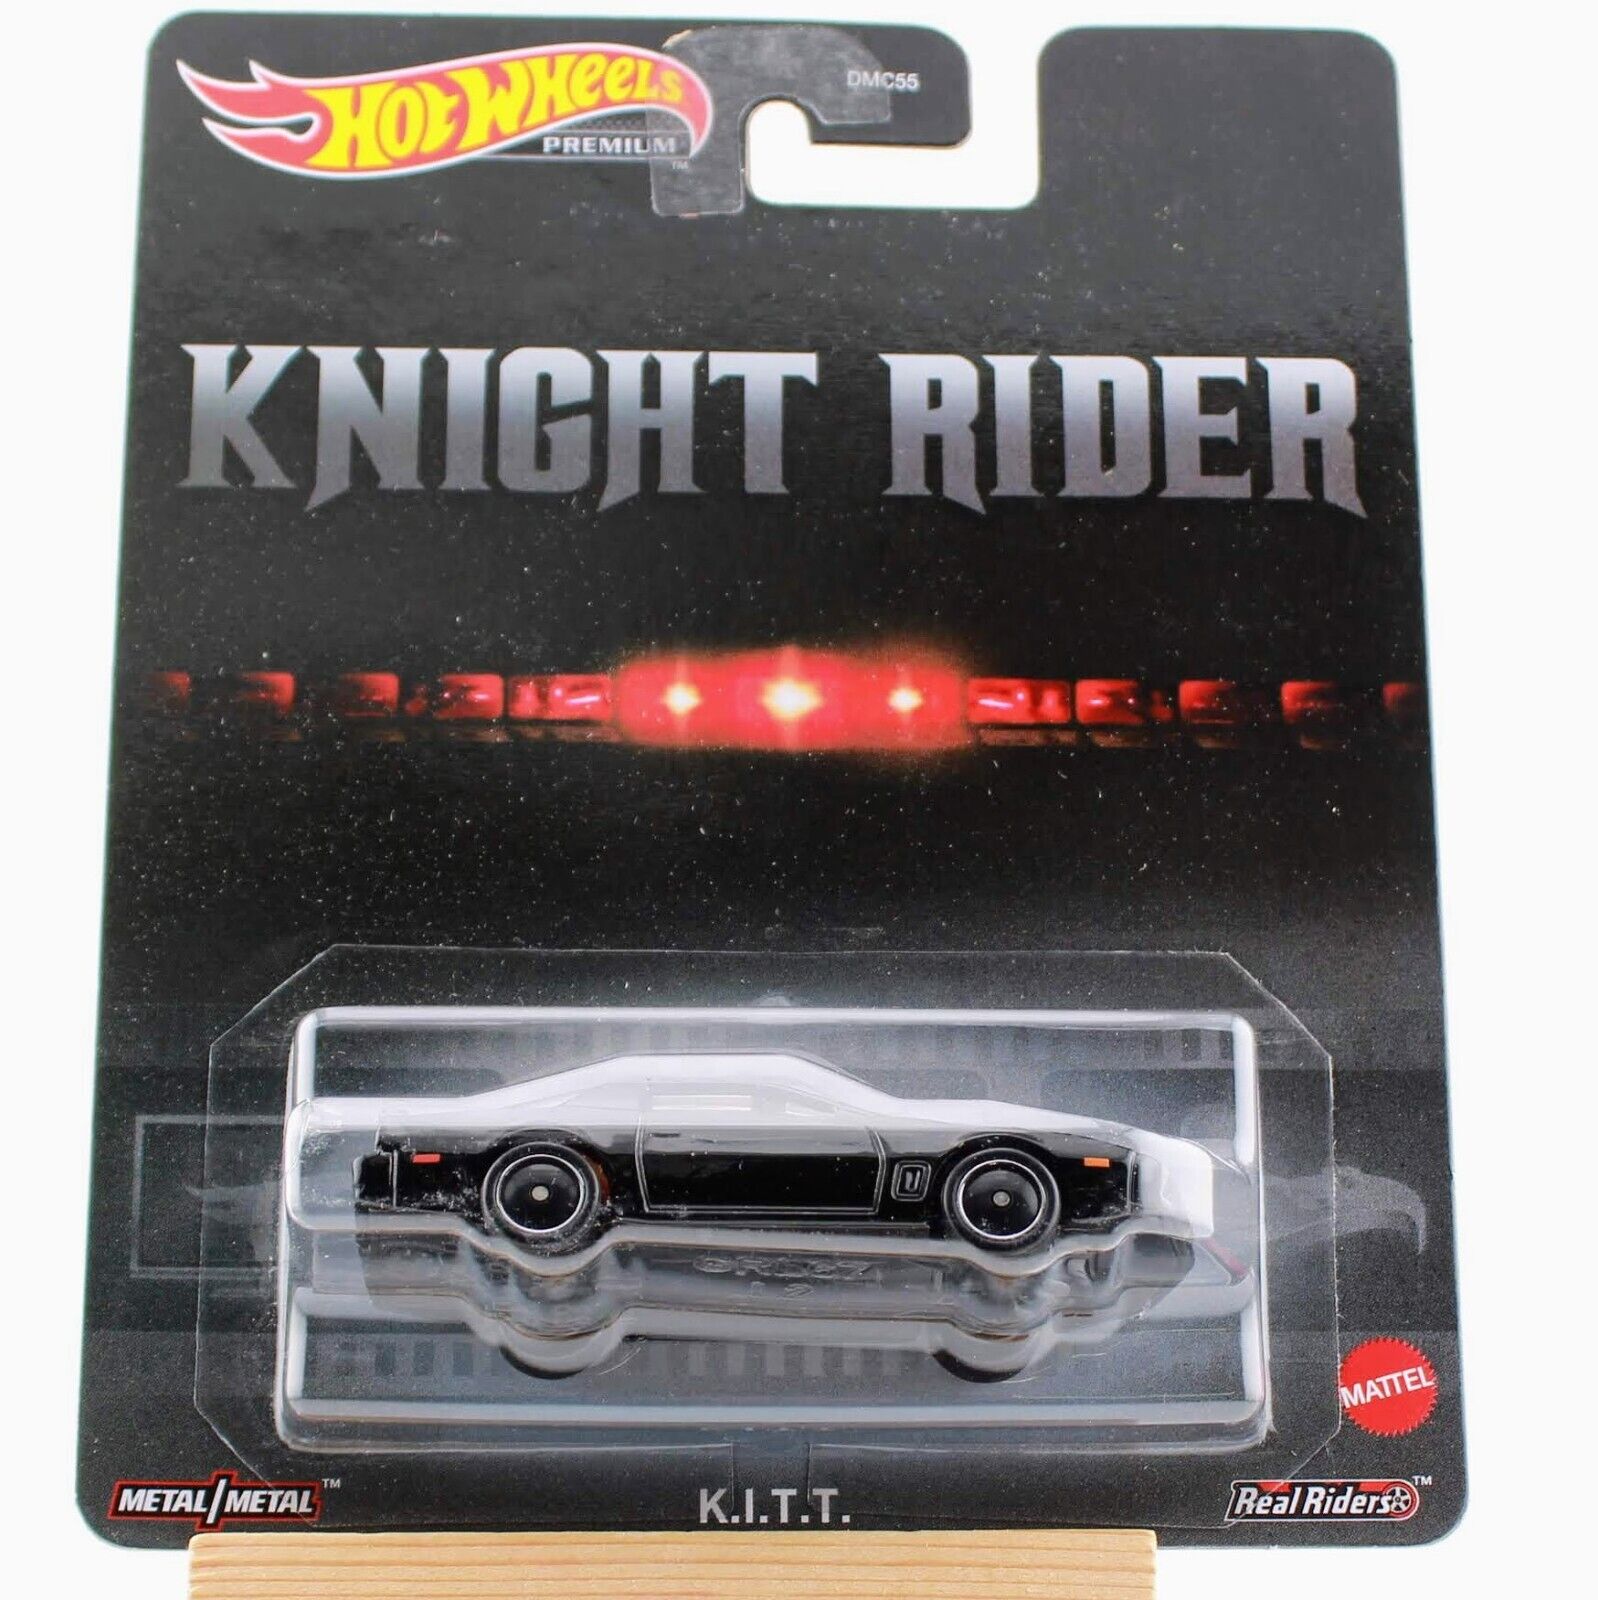 Hot Wheels Premium Knight Rider K.I.T.T. - Mattel Sealed on Cardback